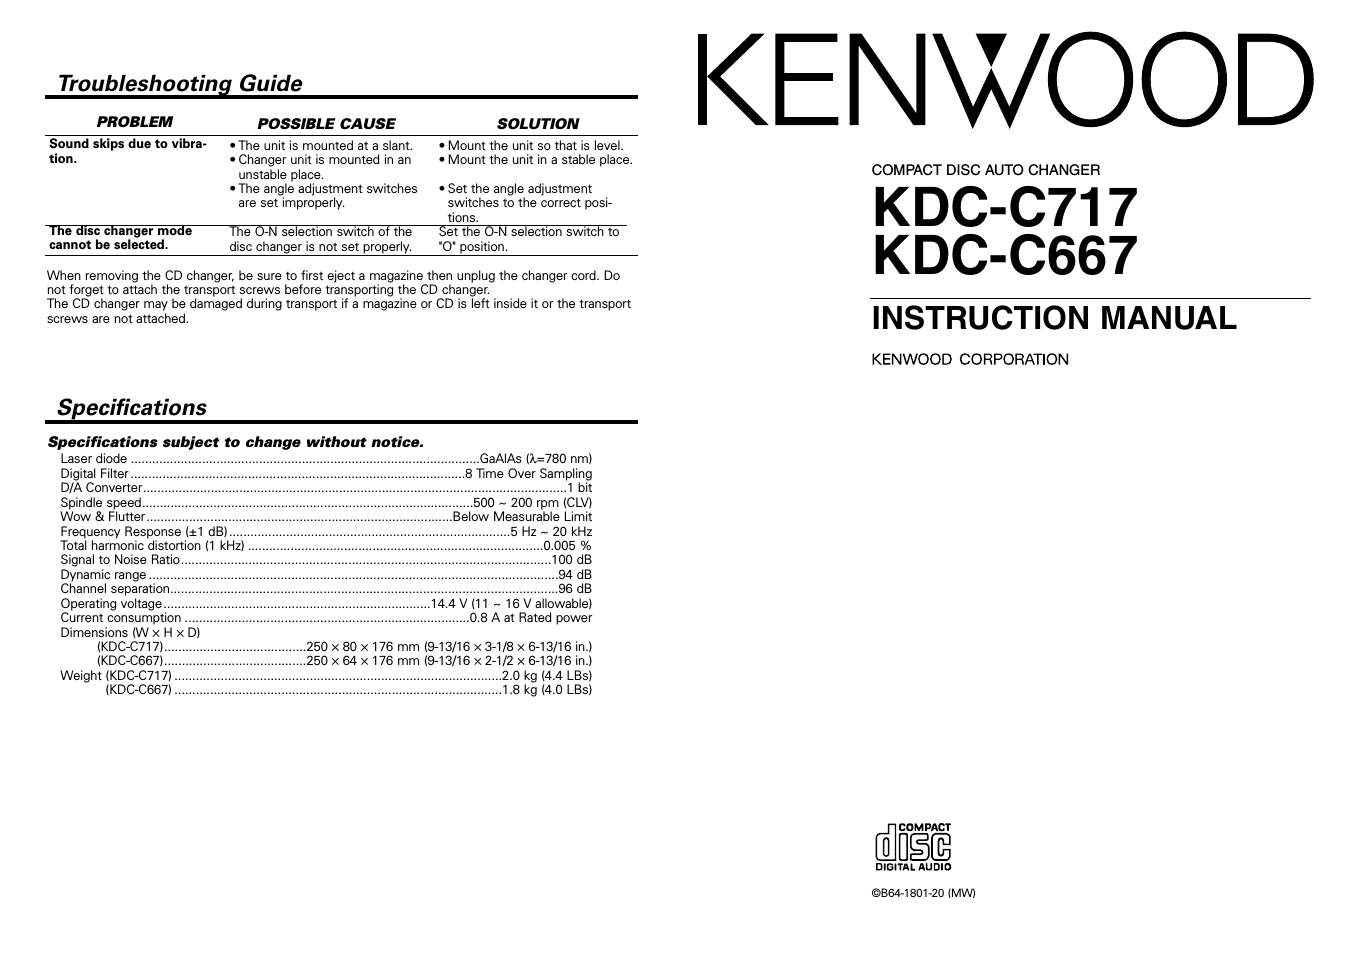 KDC-C667